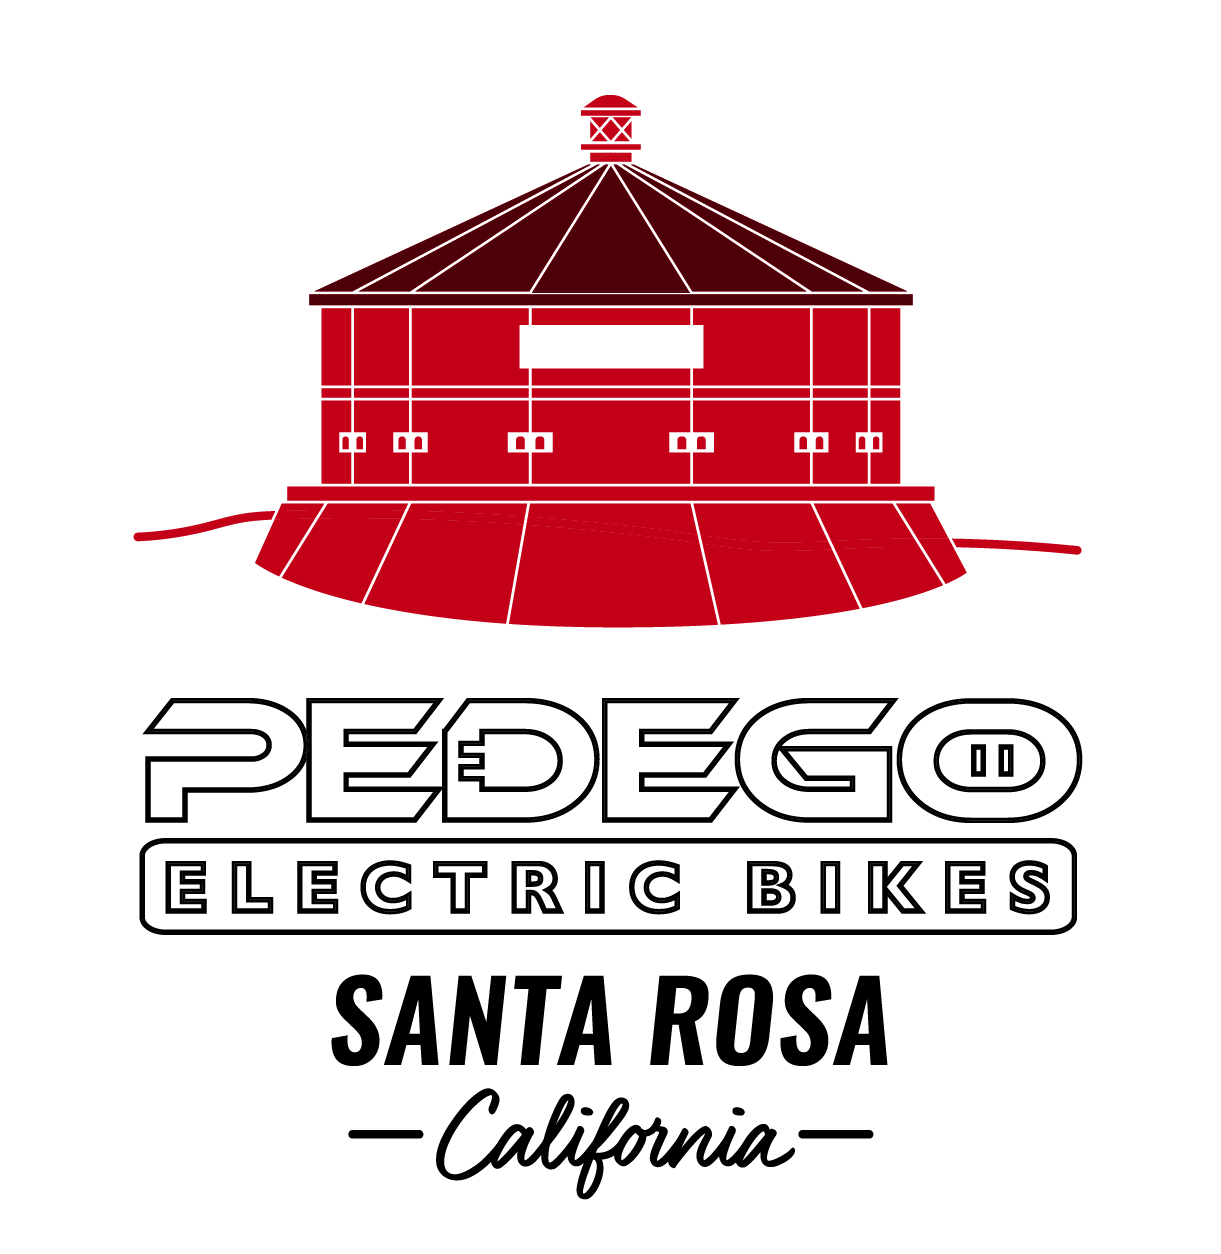 Pedego Electric Bikes -- Santa Rosa